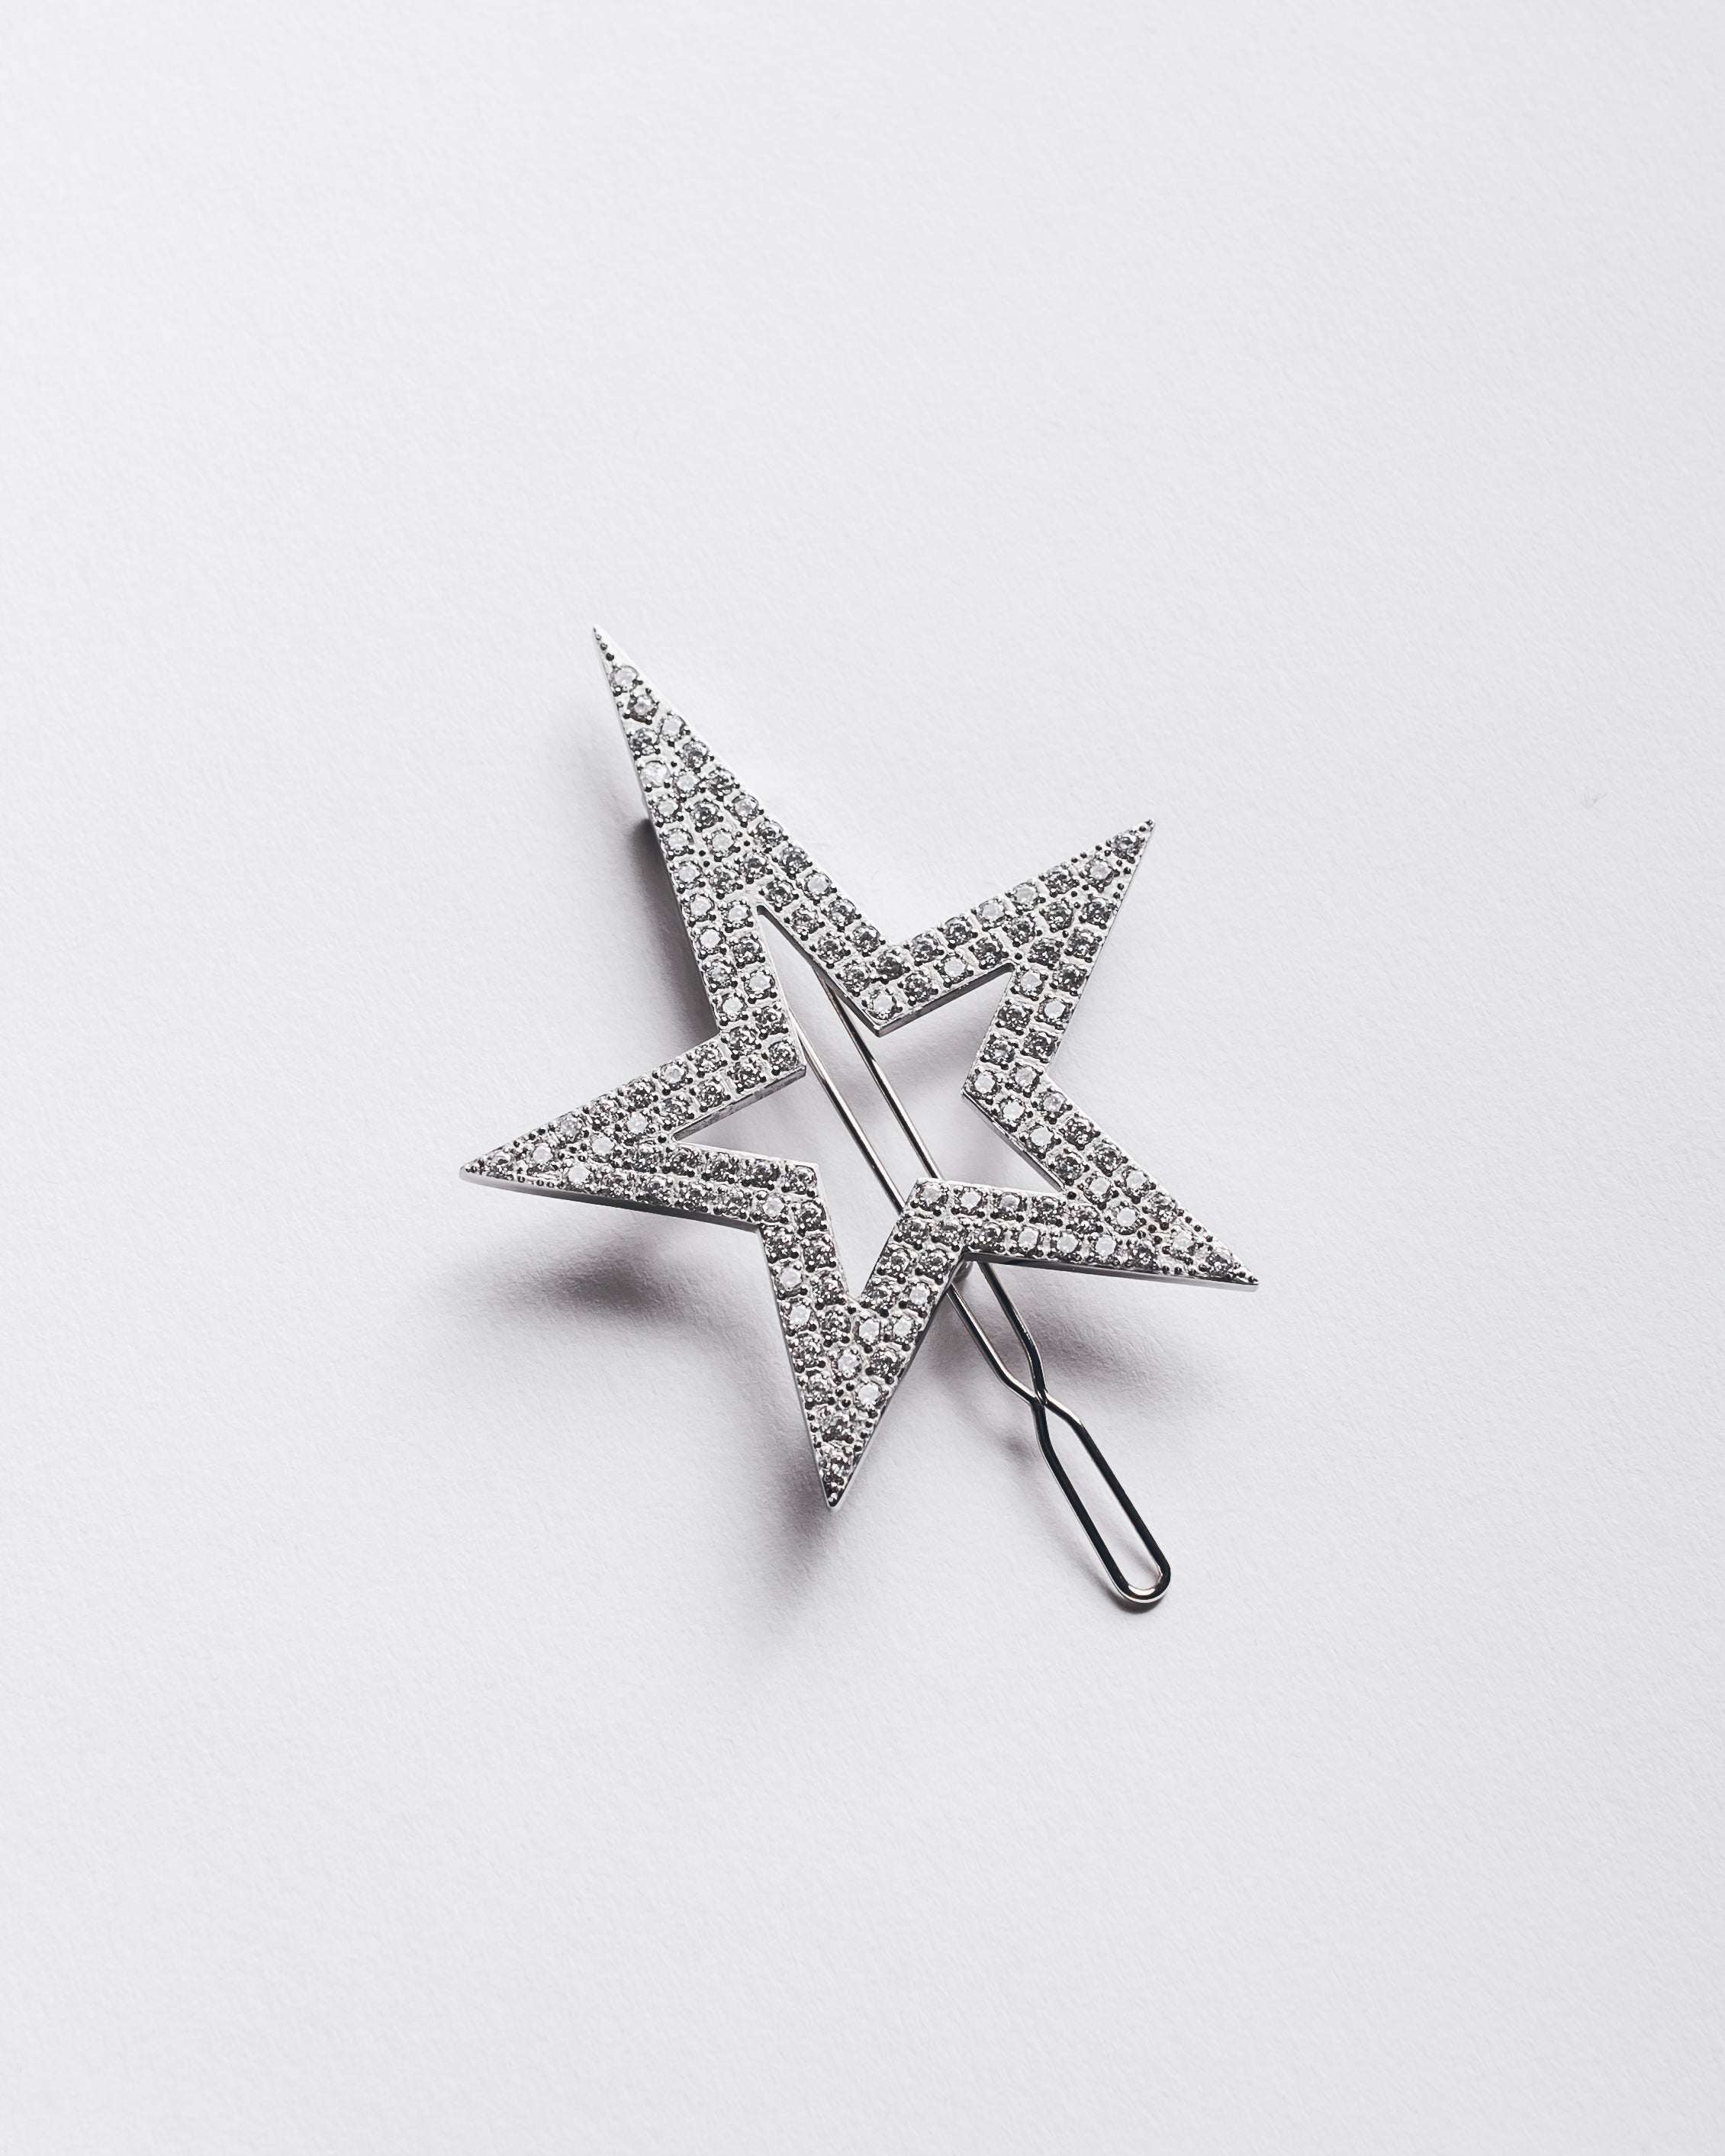 The Star Hair Pin